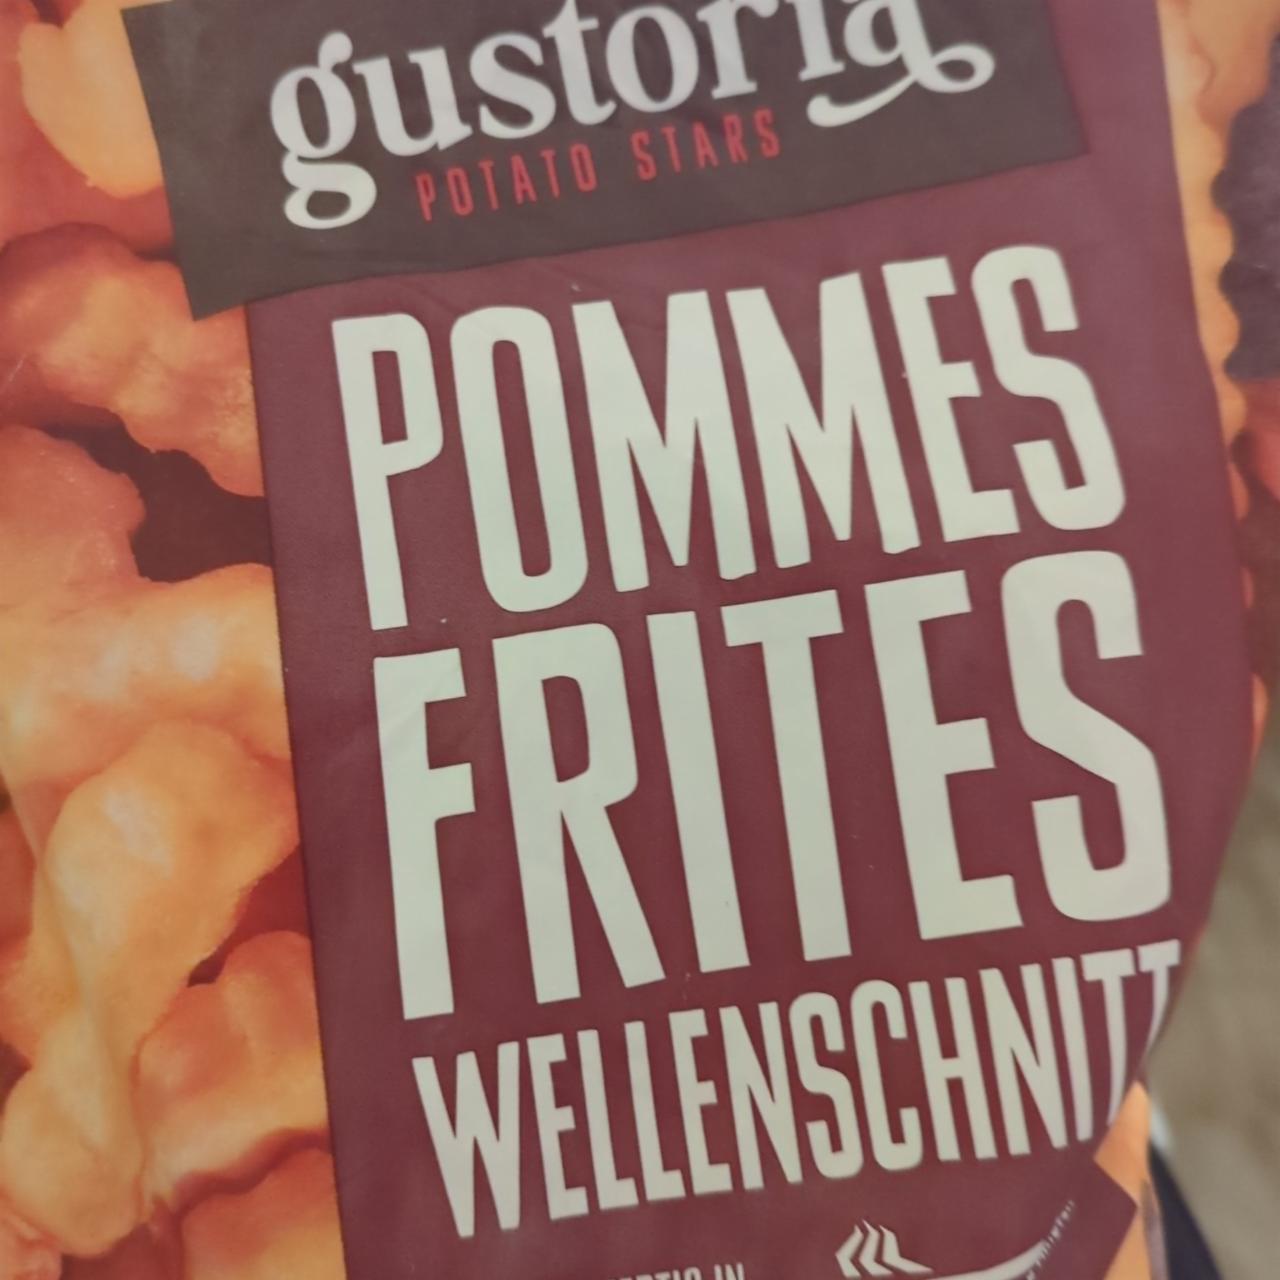 Фото - Картопля фрі Pommes Frites Wellenschnitt Gustoria